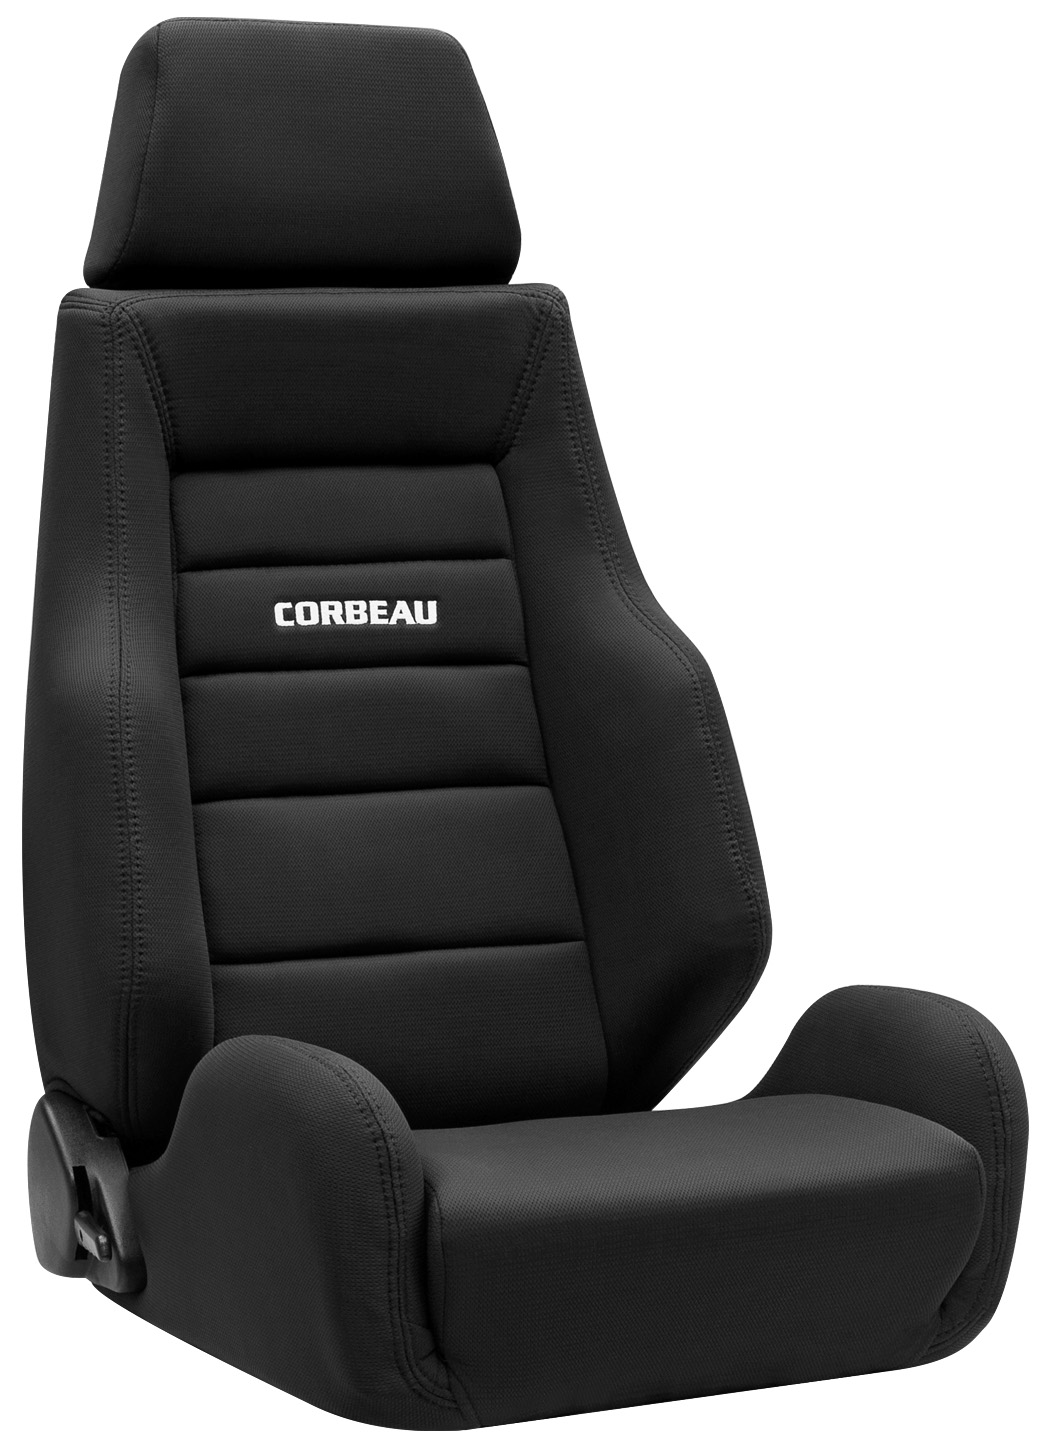 Corbeau GTSII Racing Seat, Black Cloth, 20301PR